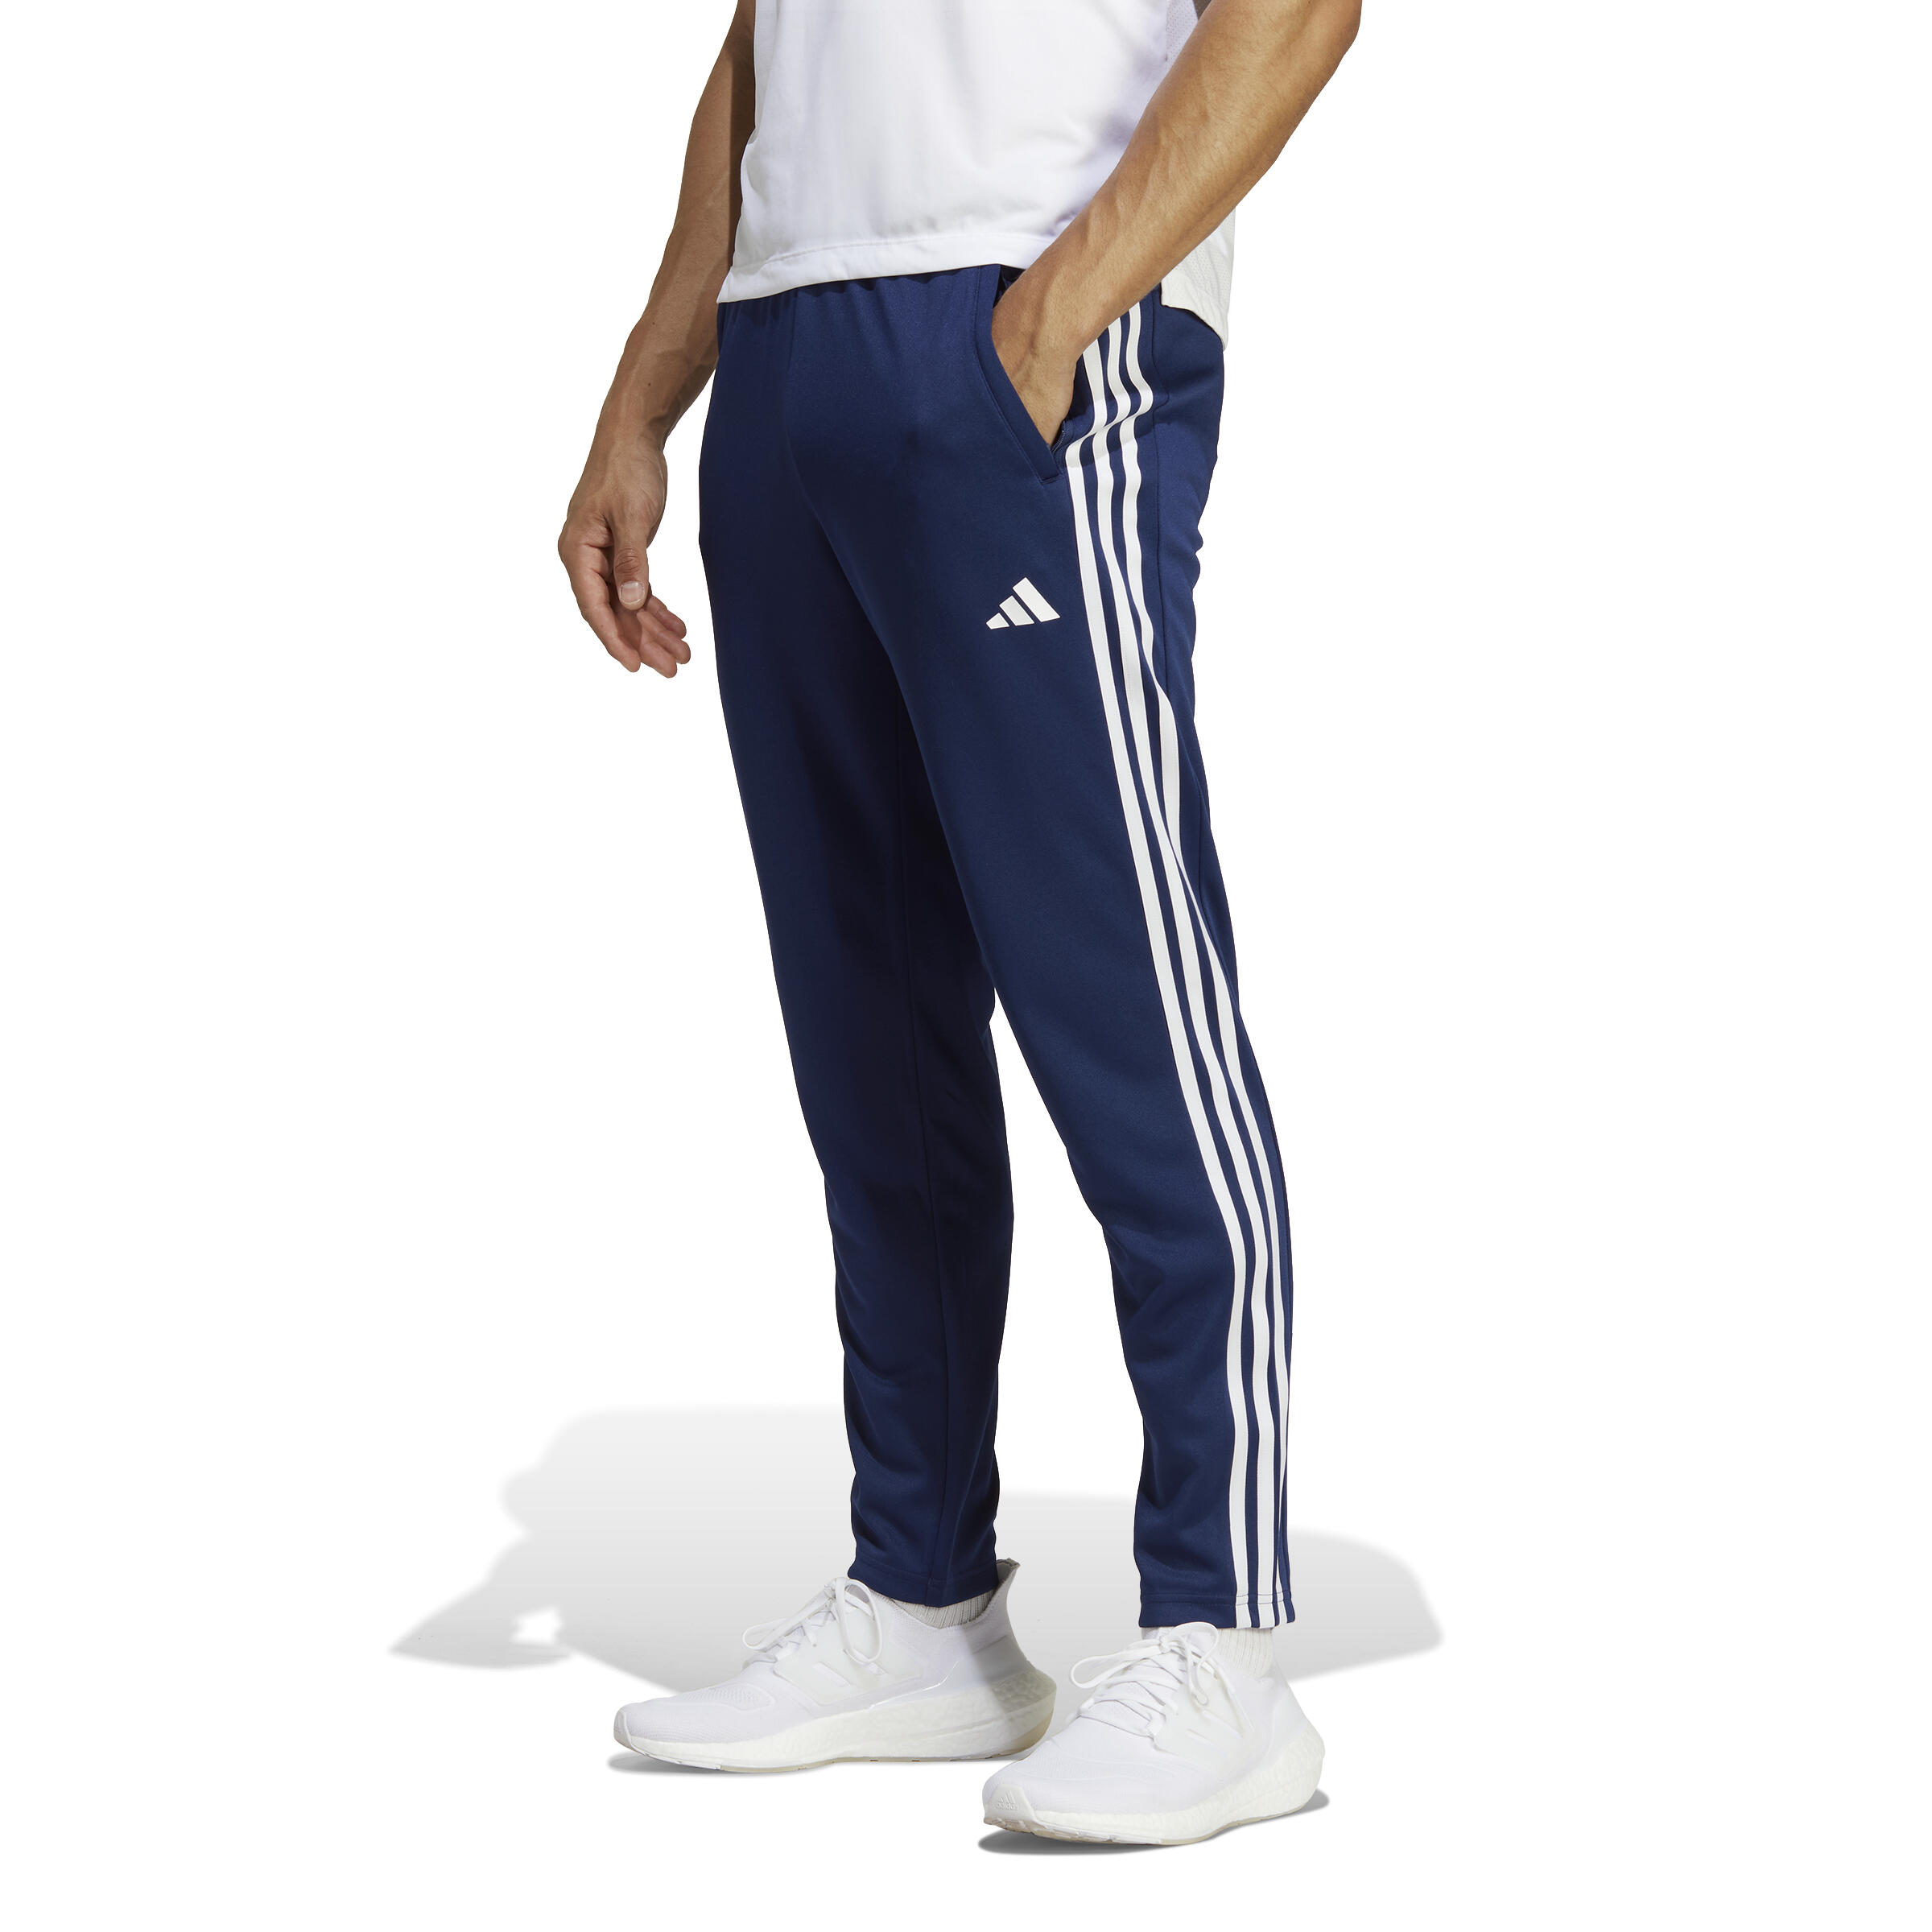 Pantalon De Trening Fitness Cardio Adidas Albastru Barbati